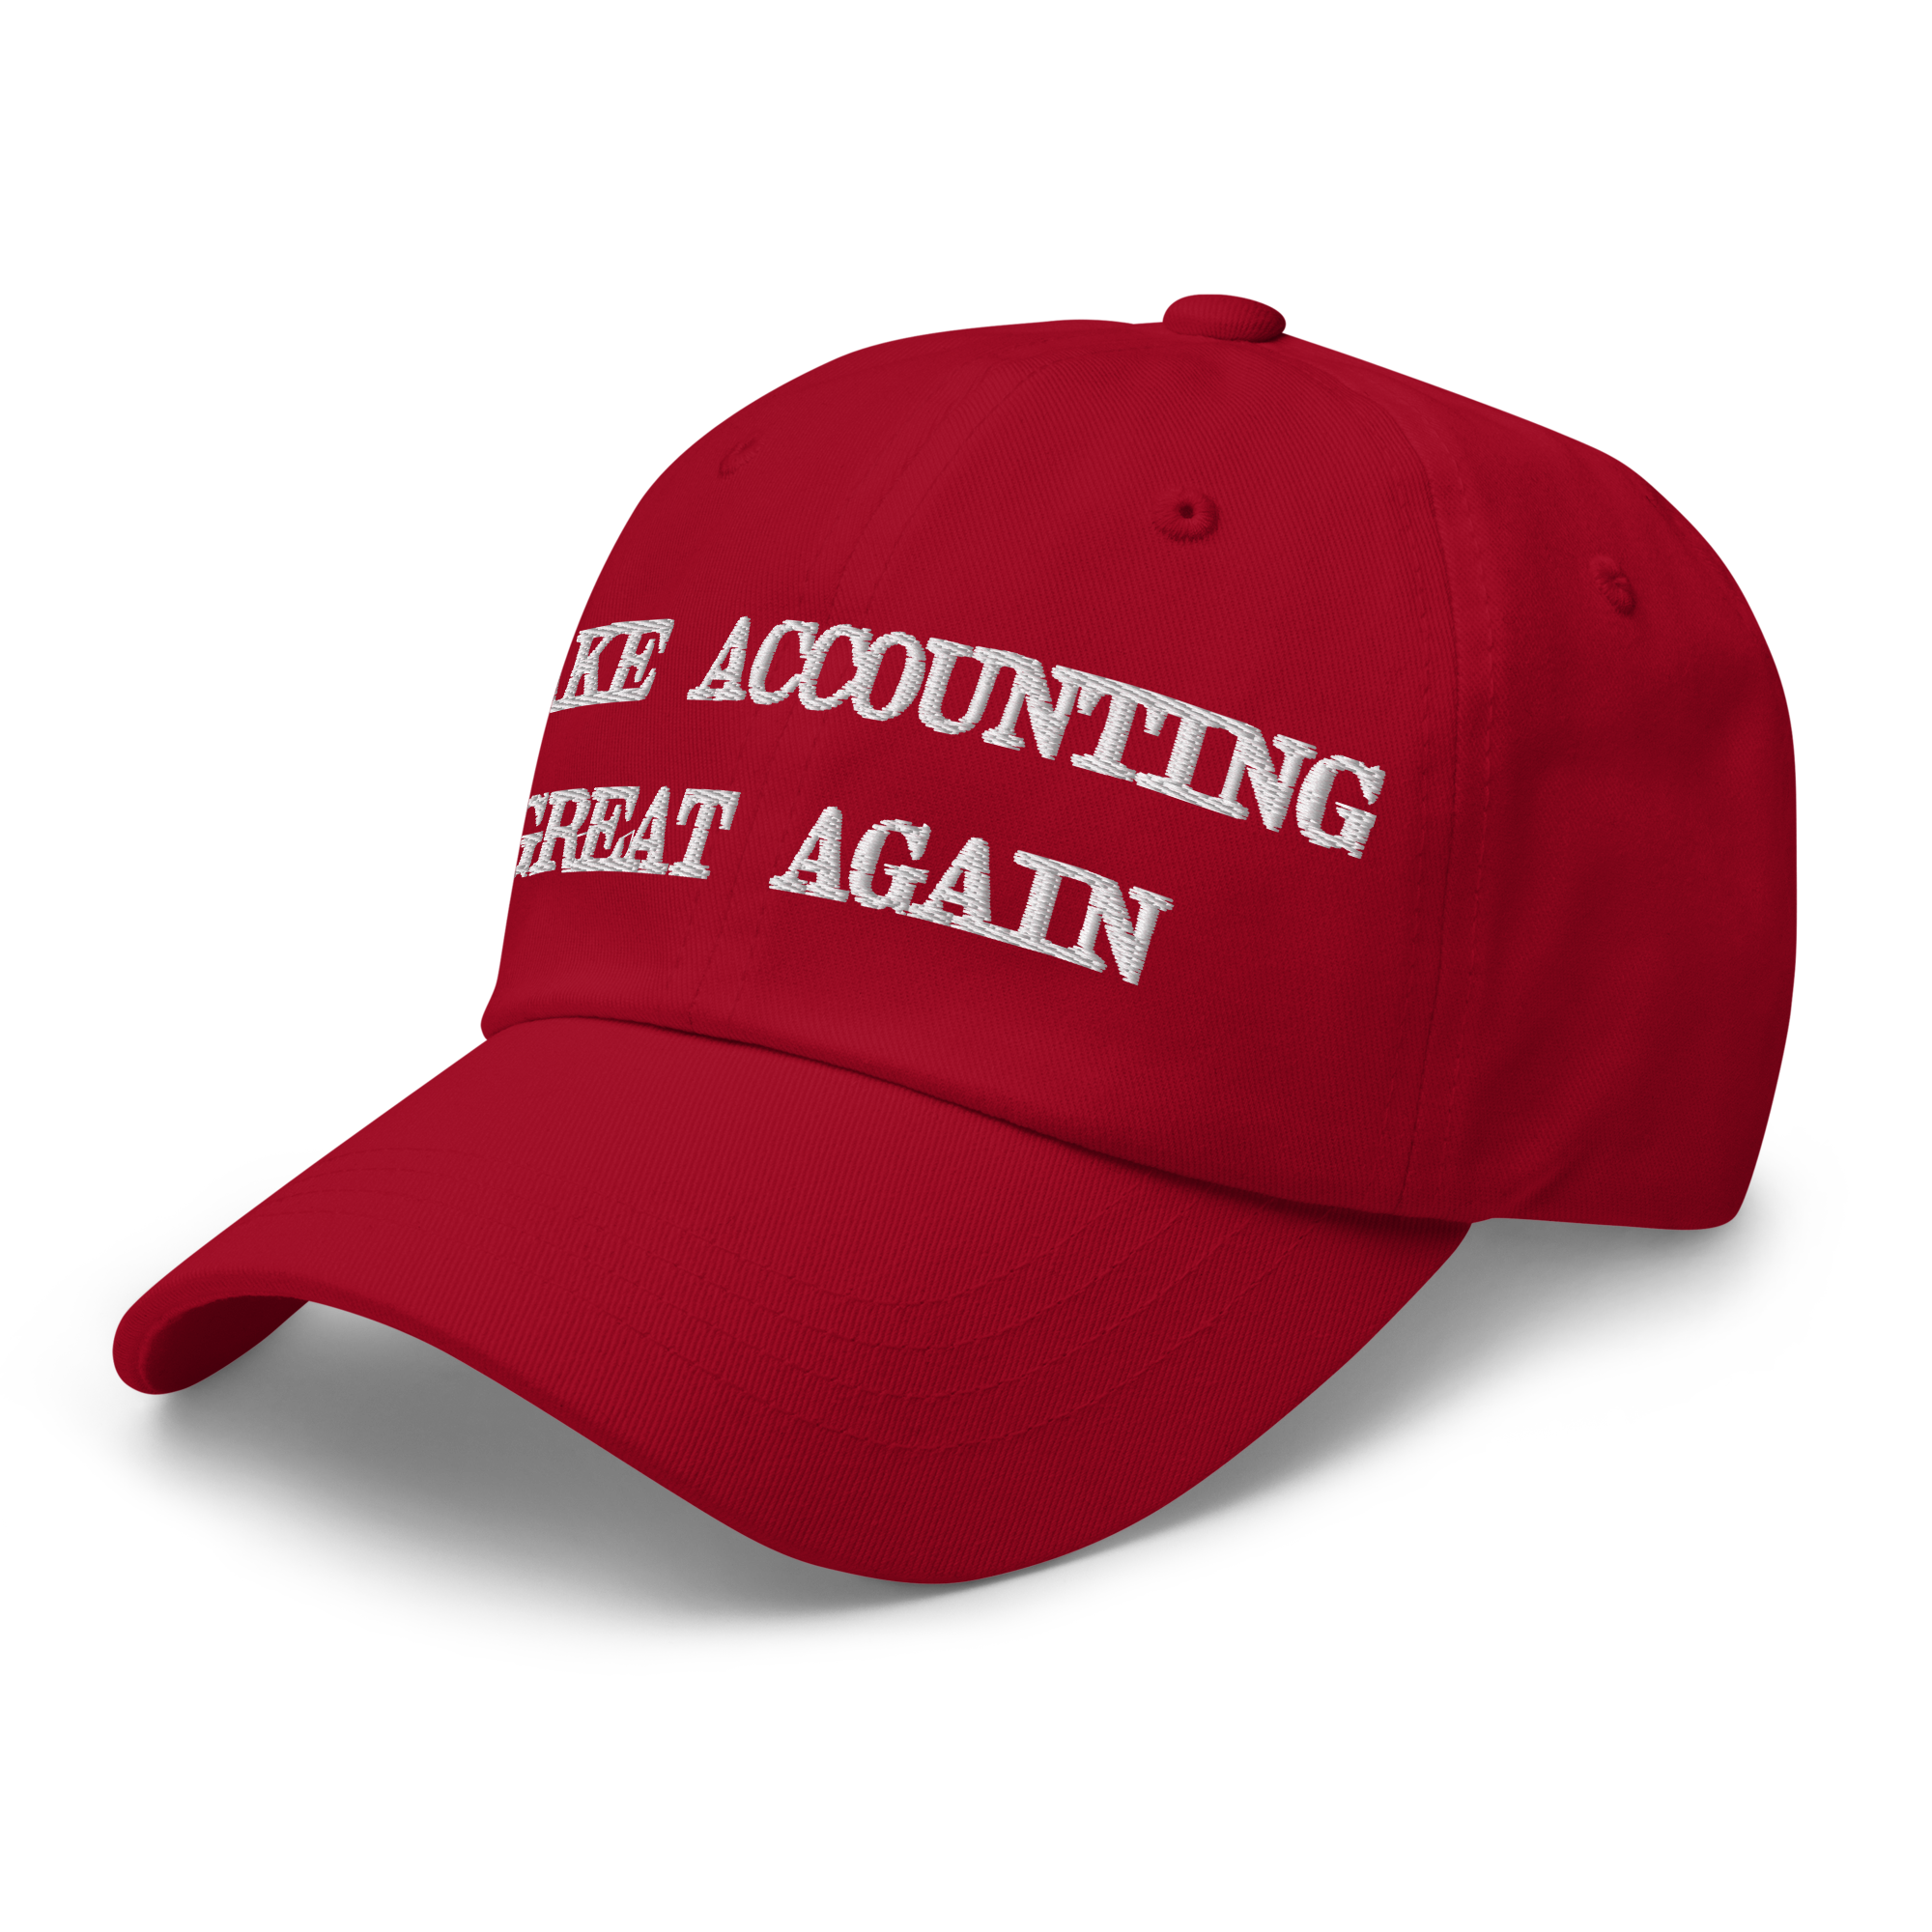 Make Accounting Great Again | Hat